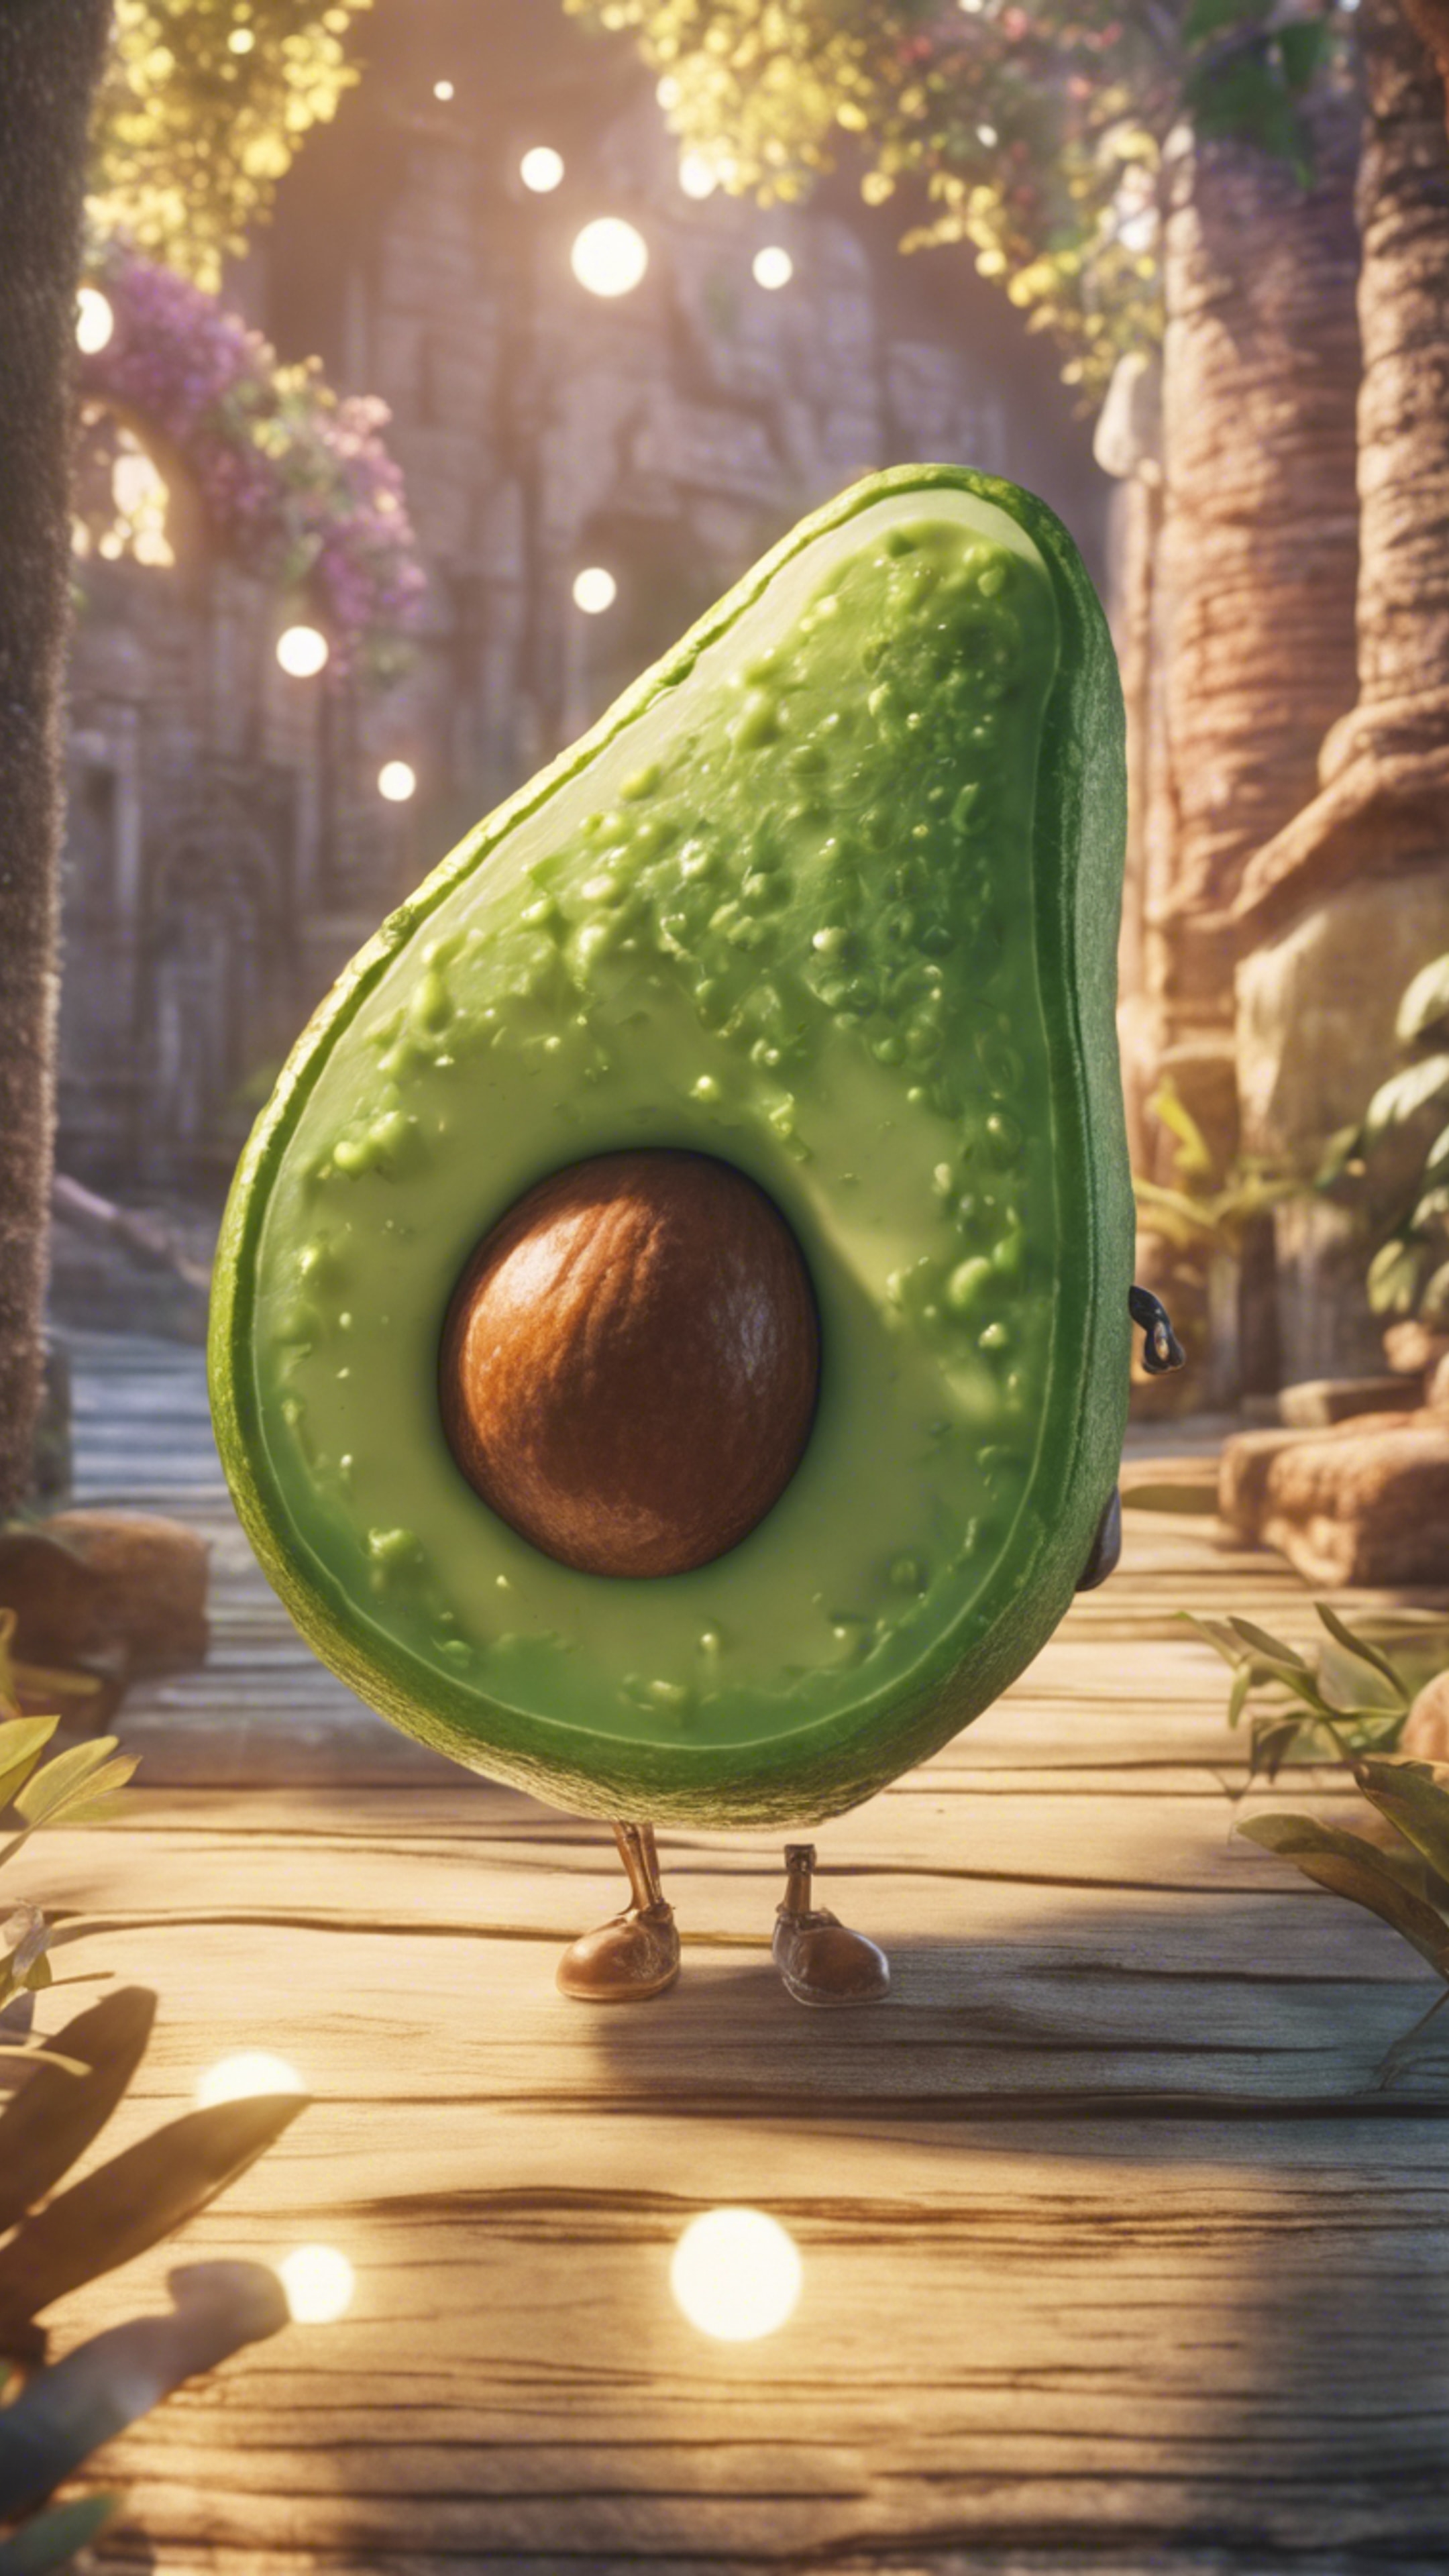 A manga-style scene of an avocado on a magical journey Tapet[452ab1c8ad254f0b95e7]